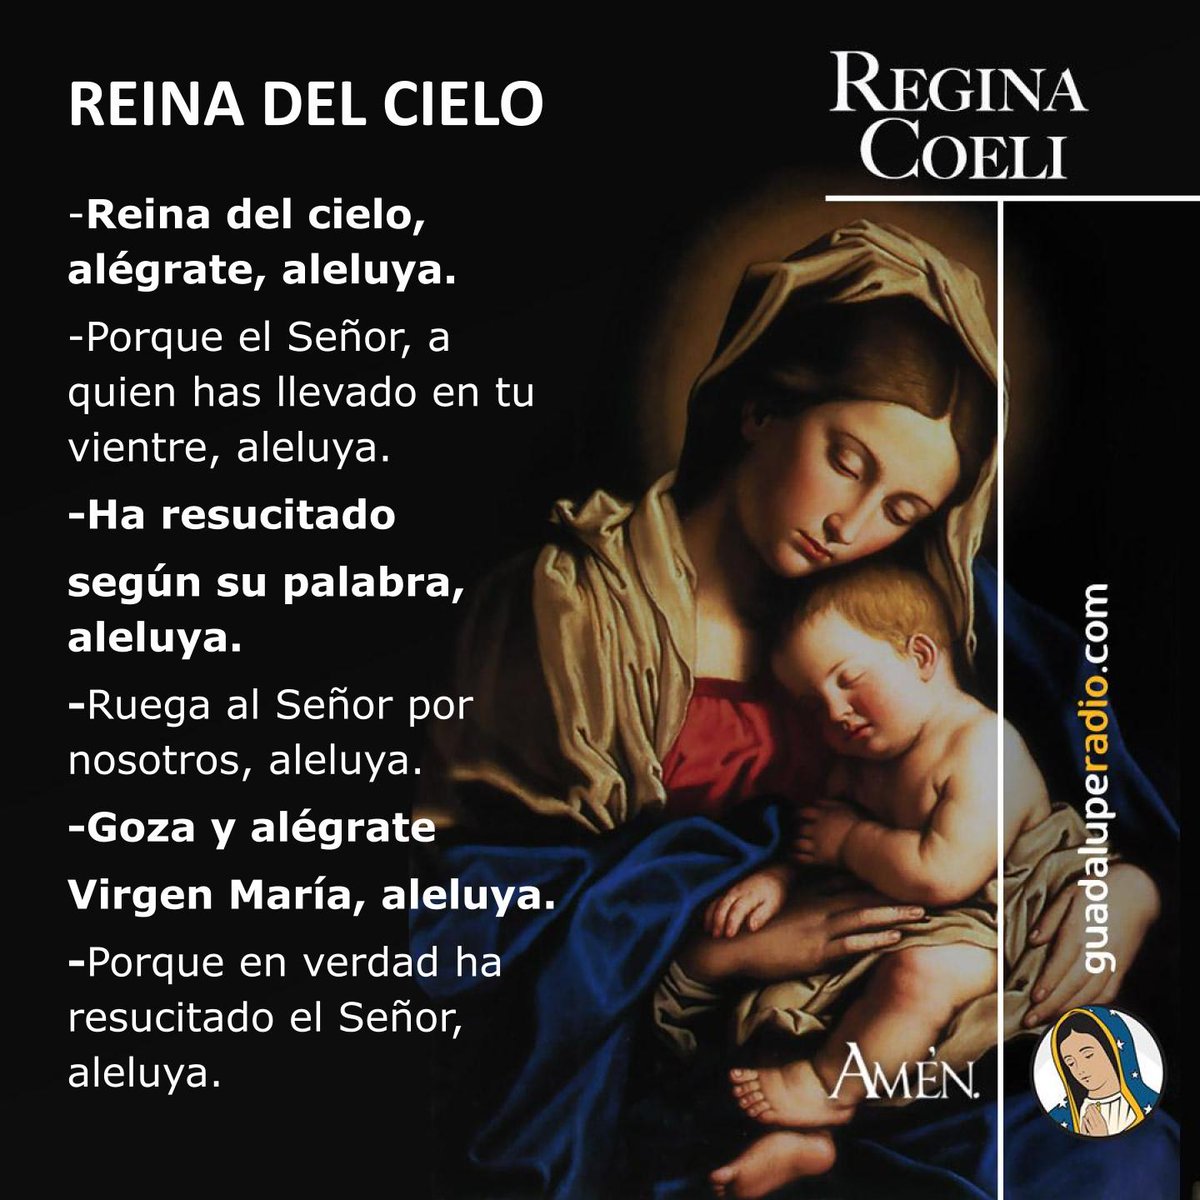 ¡El Señor resucitó, aleluya!
#ReginaCoeli
#GuadalupeRadio